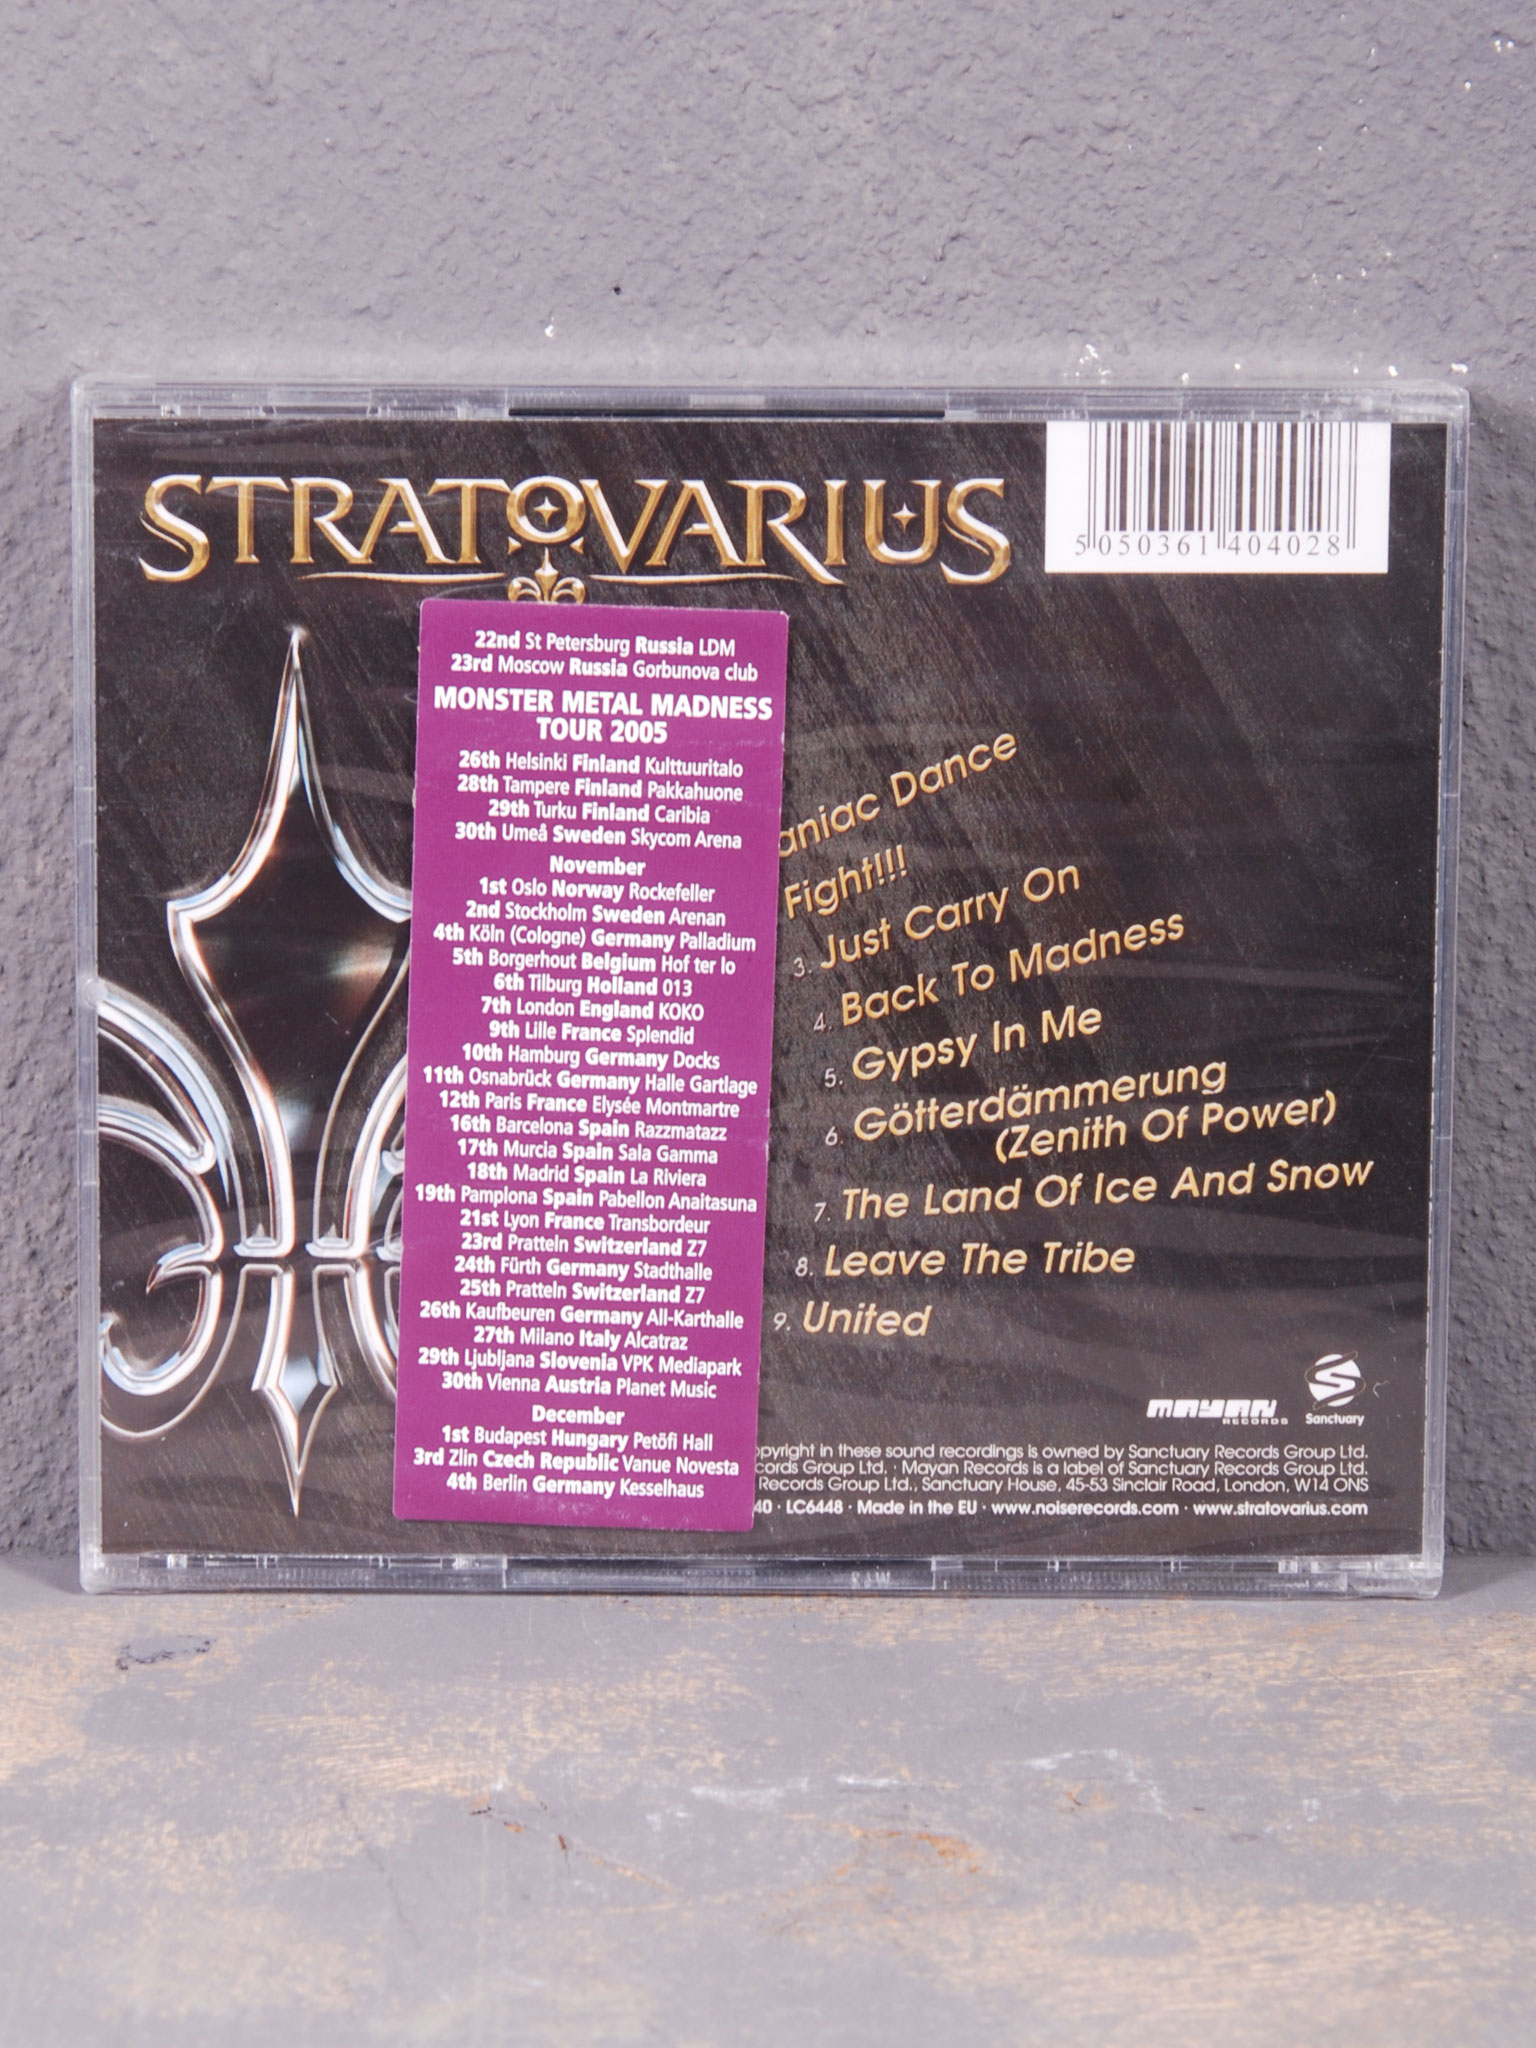 CD STRATOVARIUS, Hobbies & Toys, Music & Media, CDs & DVDs on Carousell